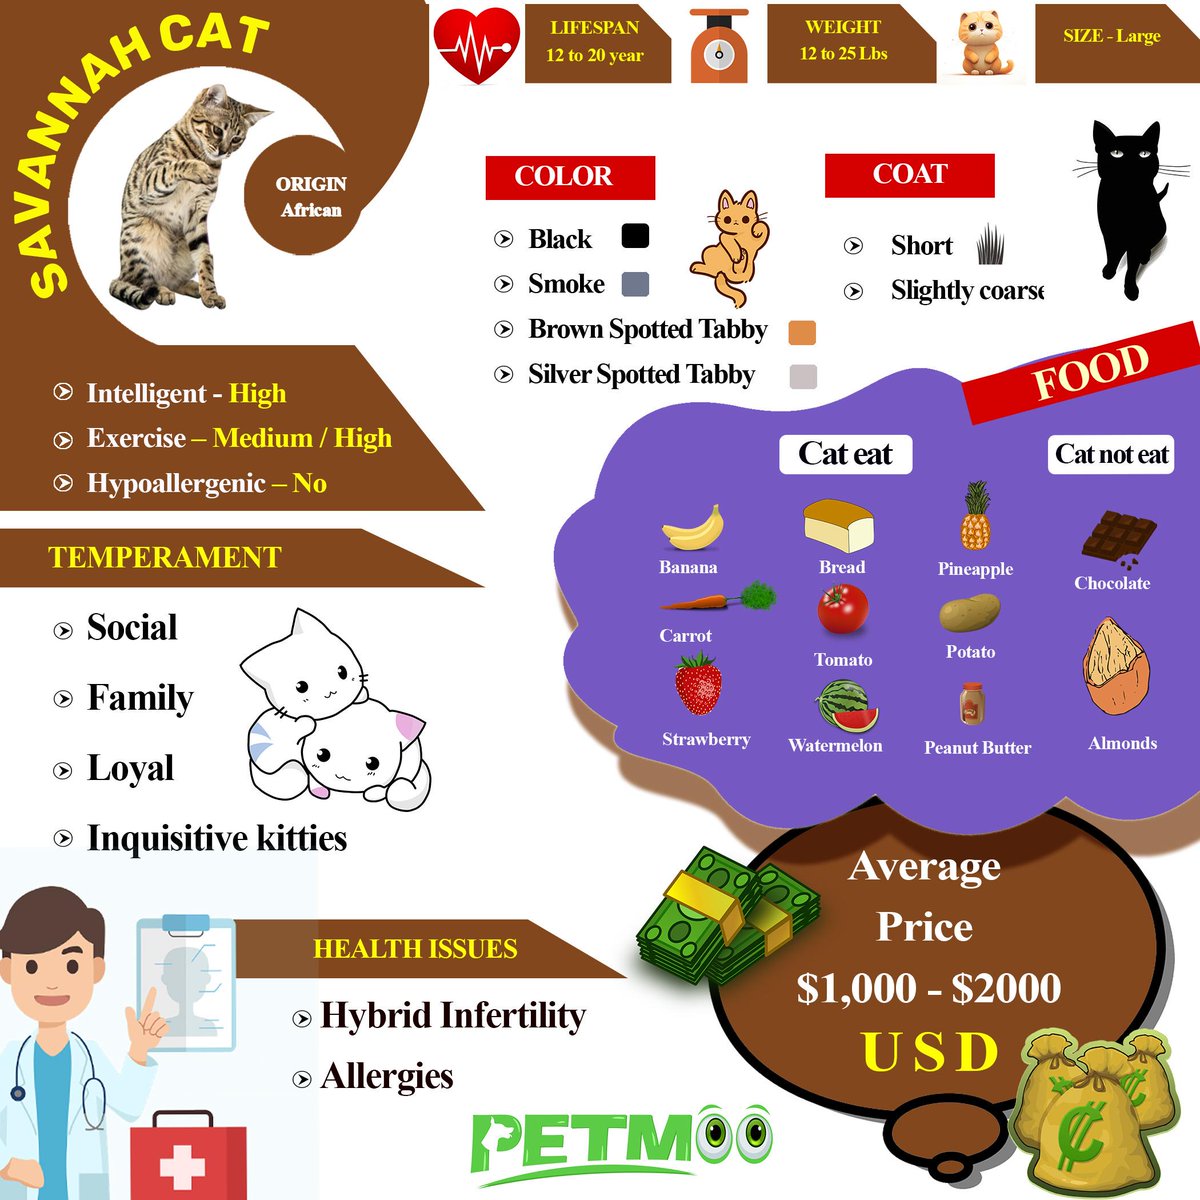 Savannah Cat Infographic
#petmoo #pets #cats #catbreeds #catinfographic #savannahcat #savannahcatinfographic